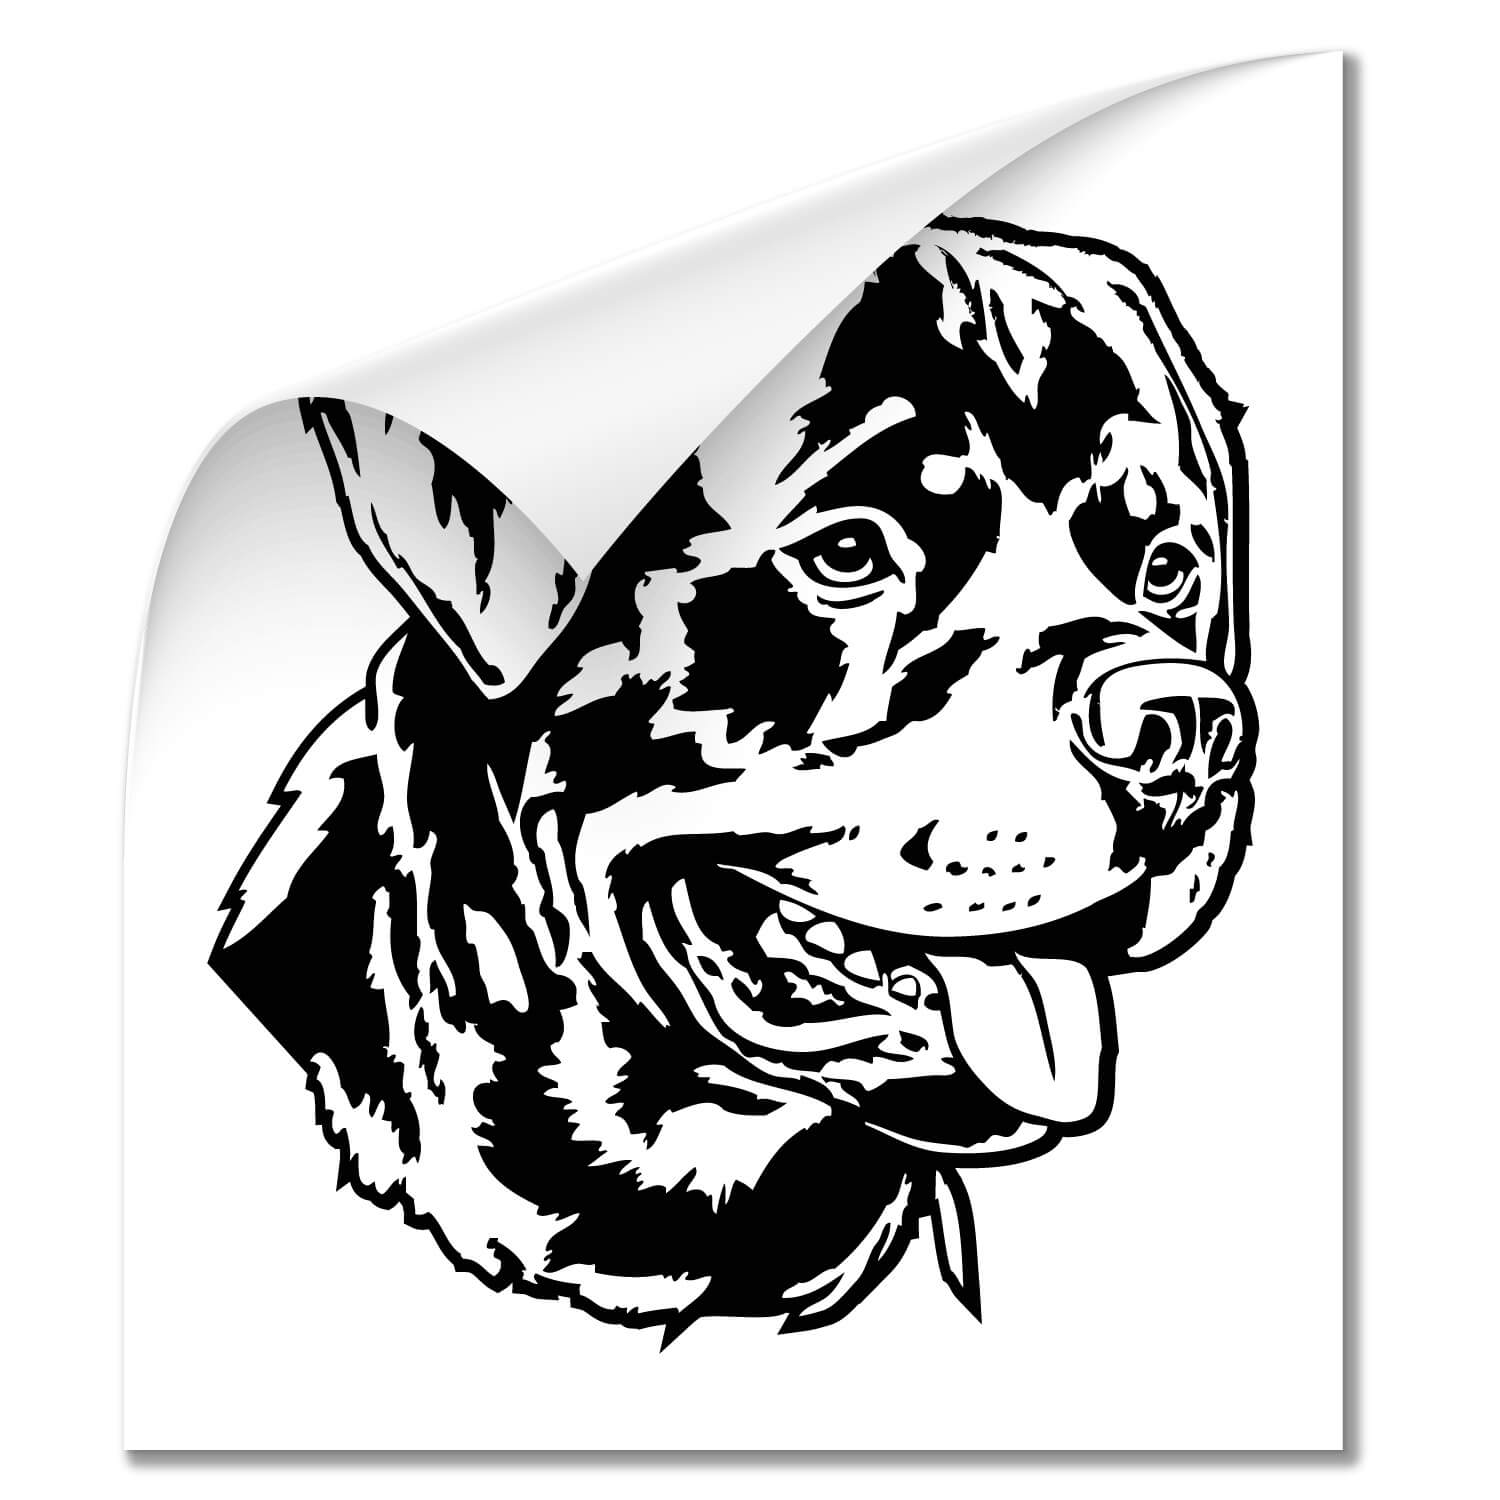 Autoaufkleber - Aufkleber - sticker Motiv: Rottweiler